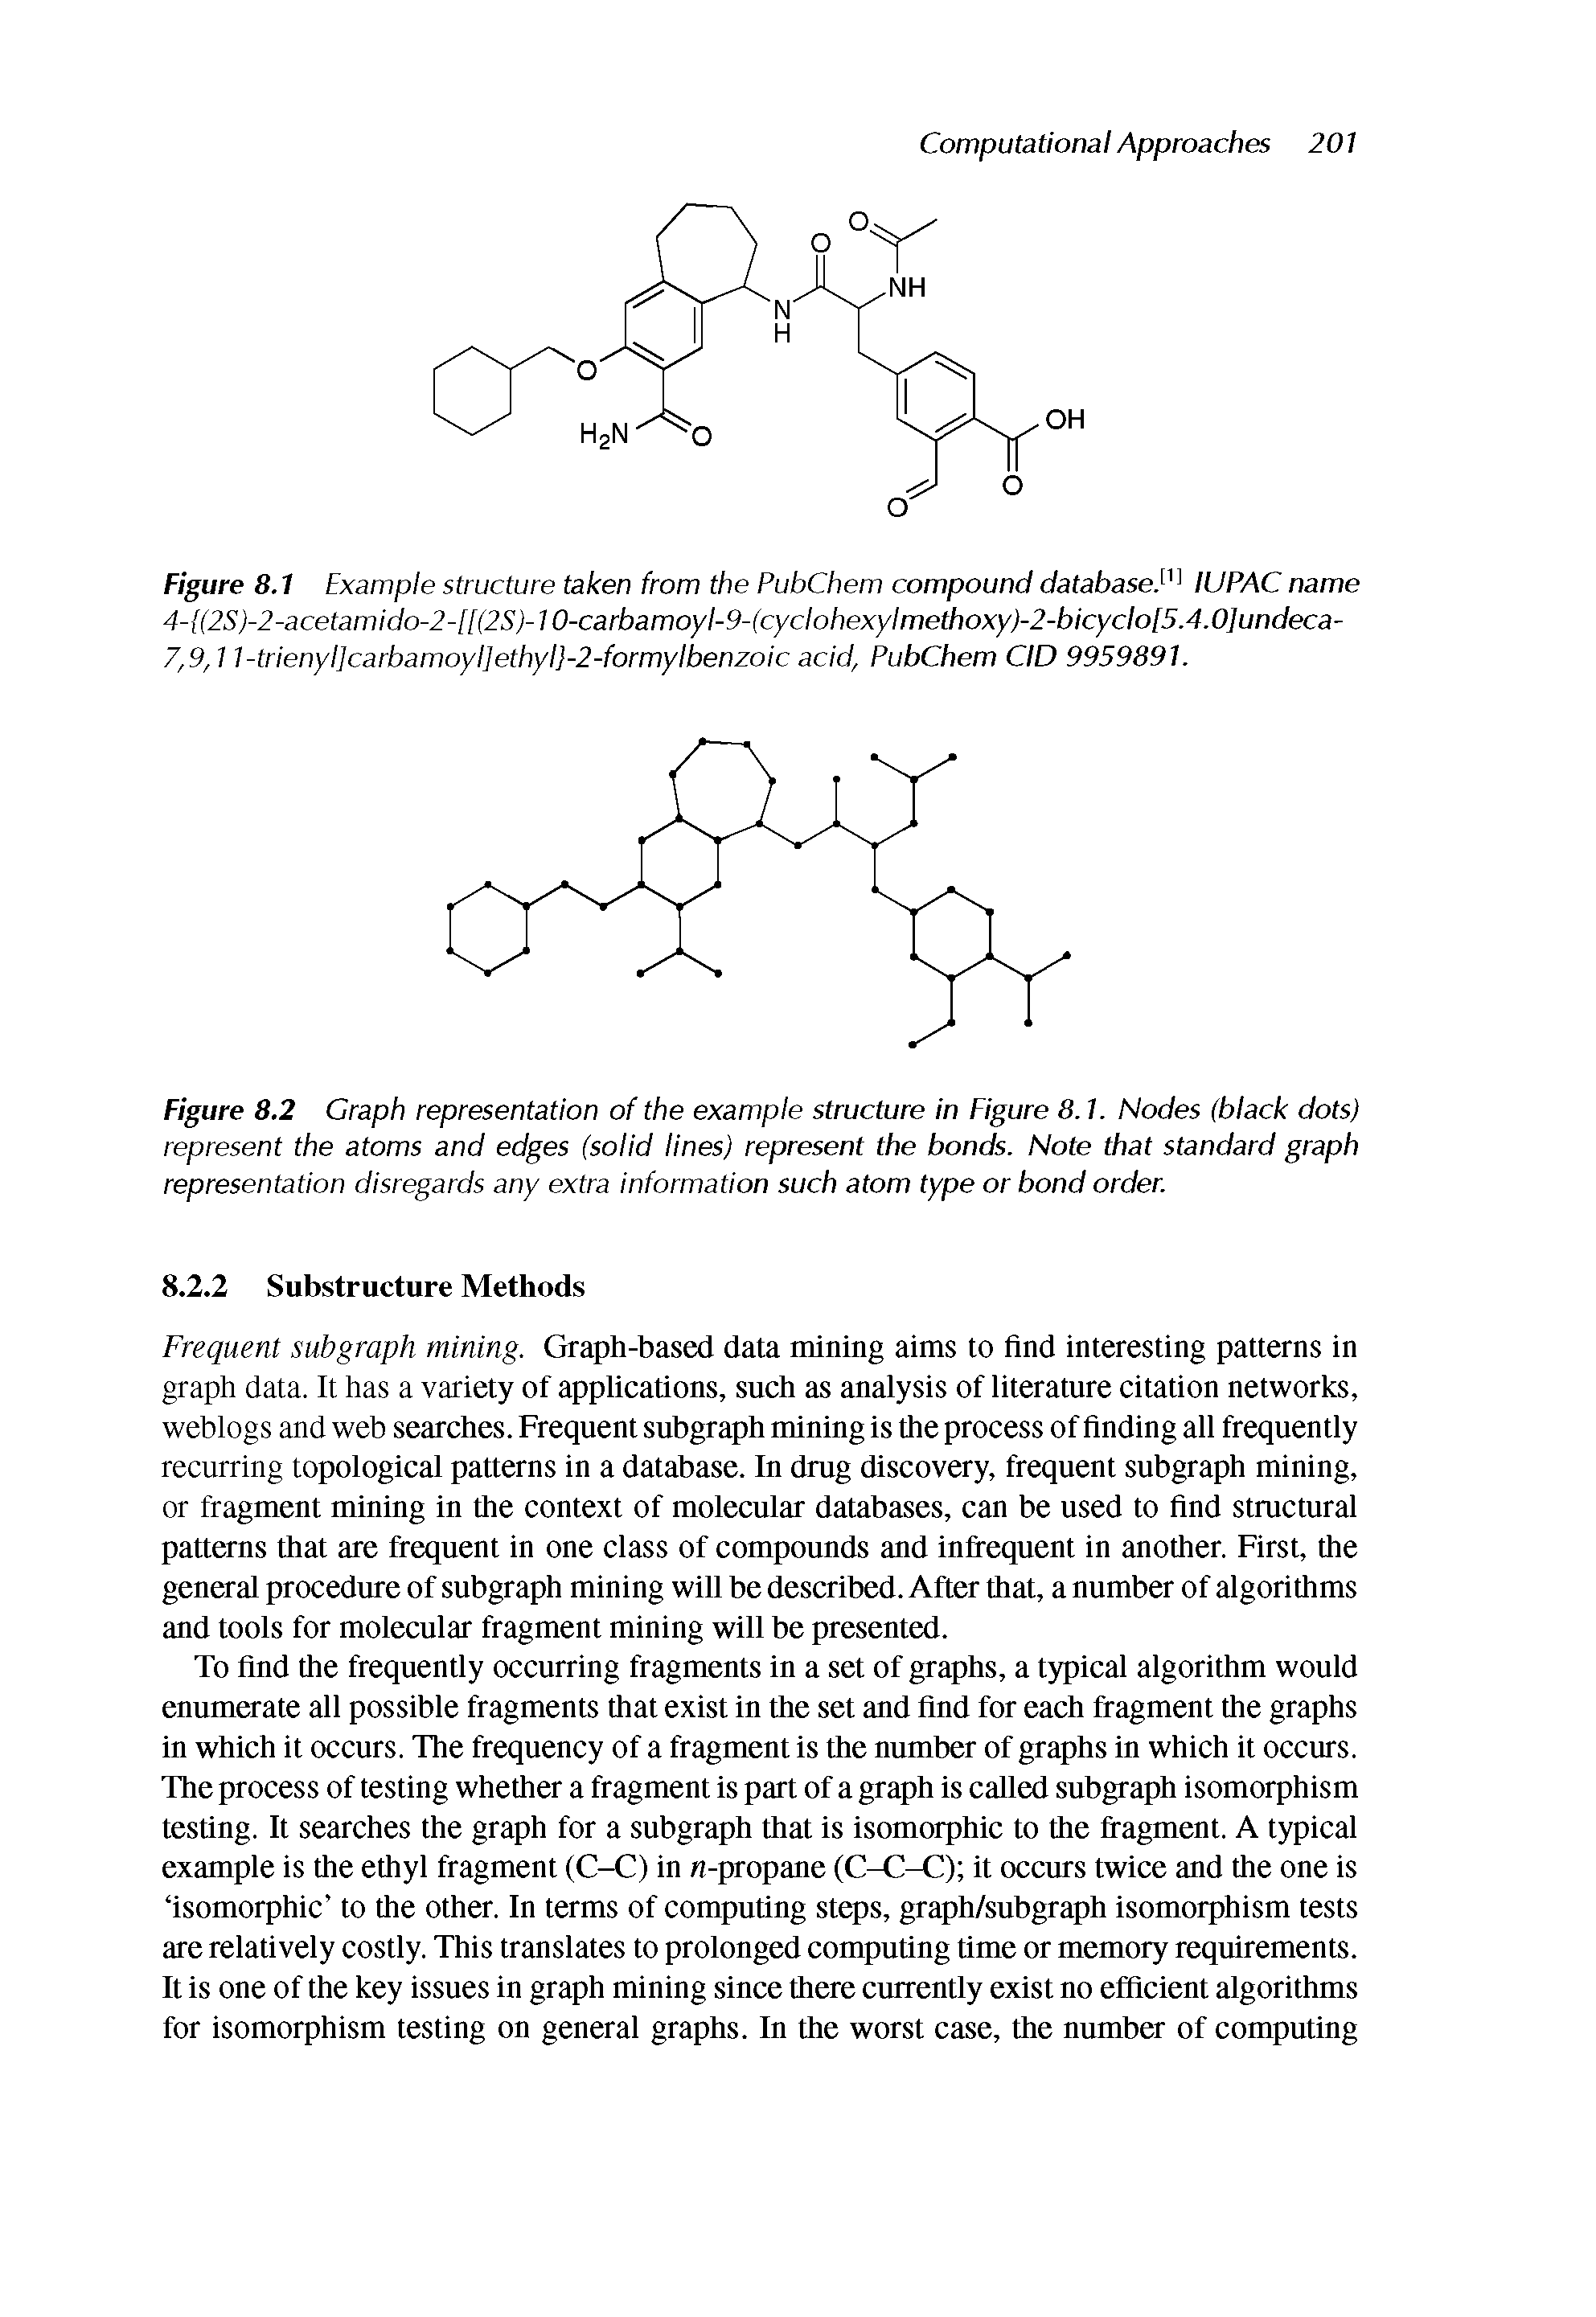 Figure 8.1 Example structure taken from the PubChem compound database) IUPAC name 4- (2S)-2-acetamido-2-[[(2S)-10-carbamoyl-9-(cyclohexylmethoxy)-2-bicyclo[5.4.0]undeca-7,9,11-trienyl]carbamoyl]ethyl -2-formylbenzoic acid, PubChem CID 9959891.